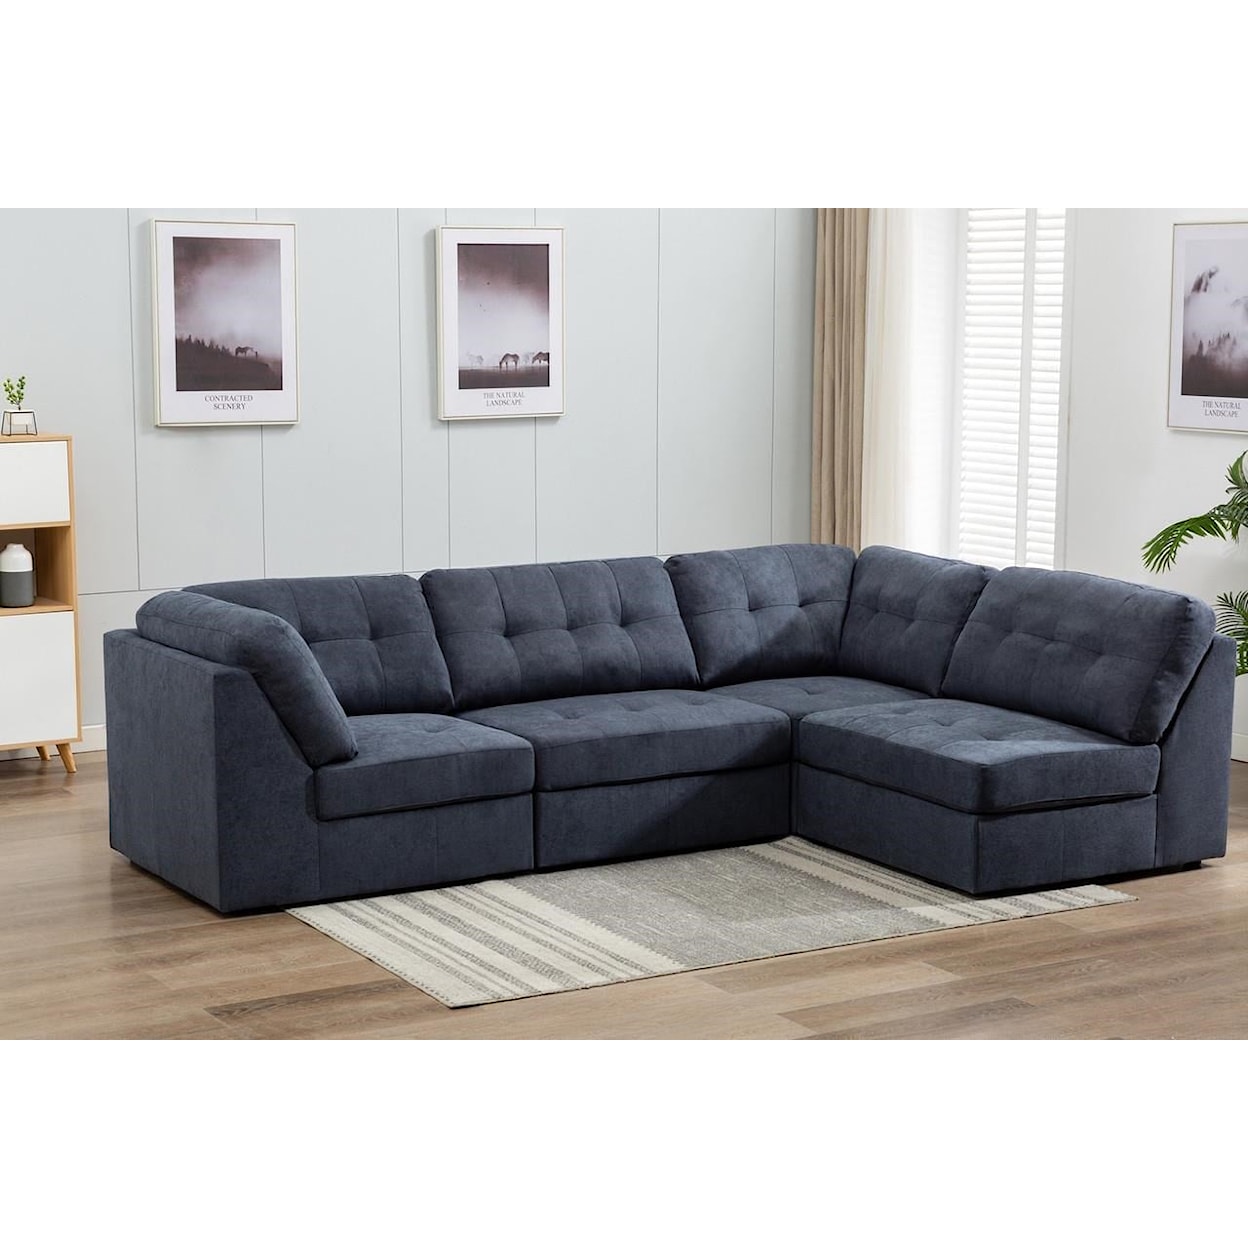 Lifestyle U9377 Sectional Sectional Sofa